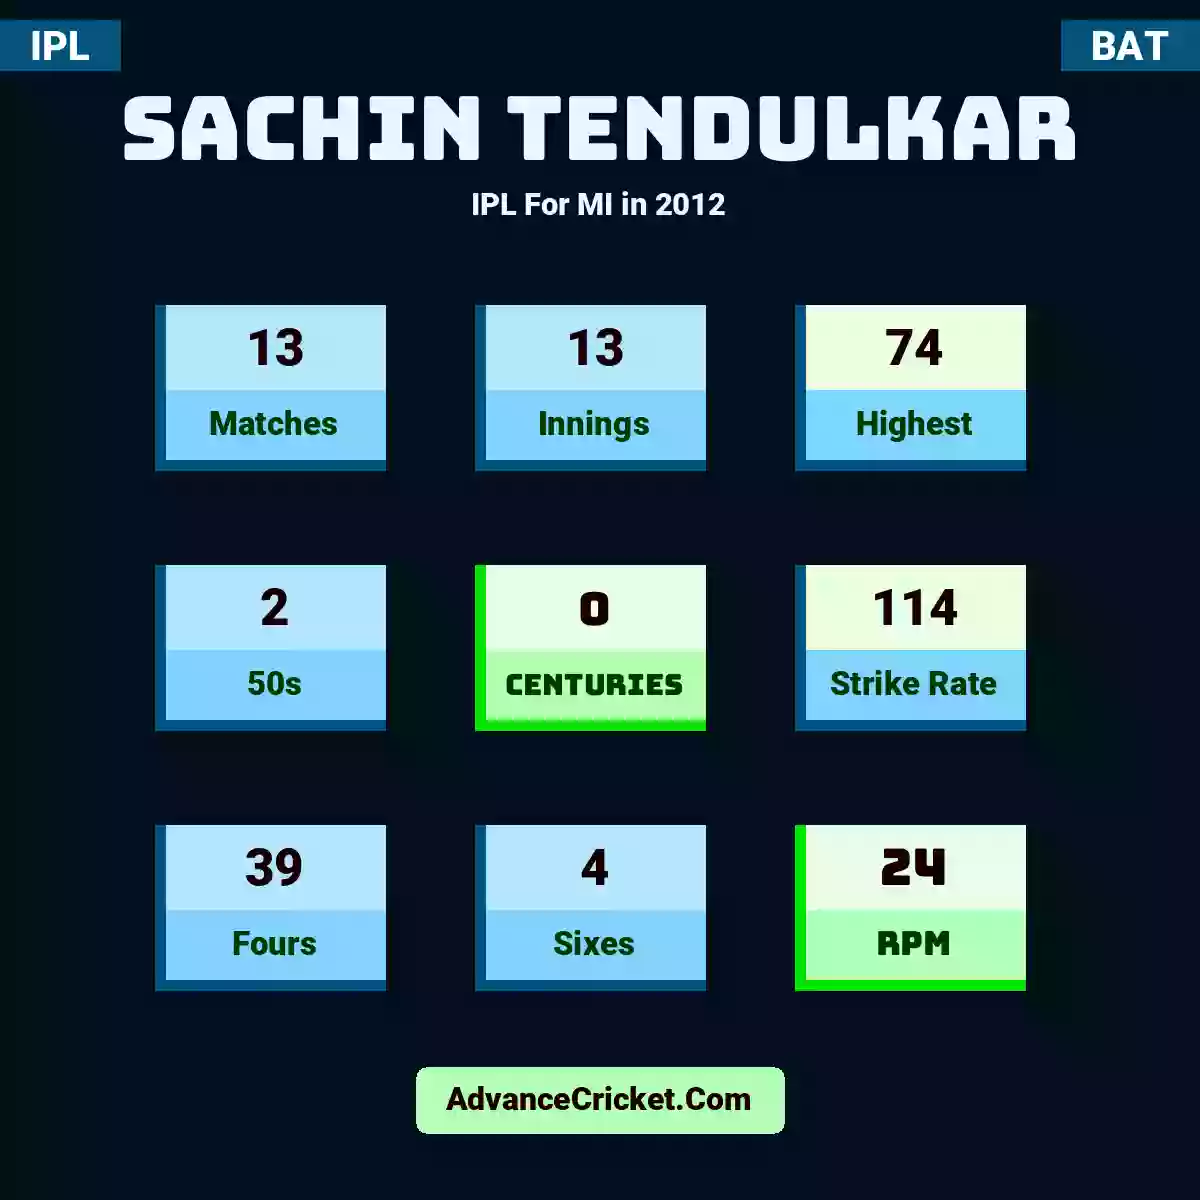 Sachin Tendulkar IPL  For MI in 2012, Sachin Tendulkar played 13 matches, scored 74 runs as highest, 2 half-centuries, and 0 centuries, with a strike rate of 114. S.Tendulkar hit 39 fours and 4 sixes, with an RPM of 24.